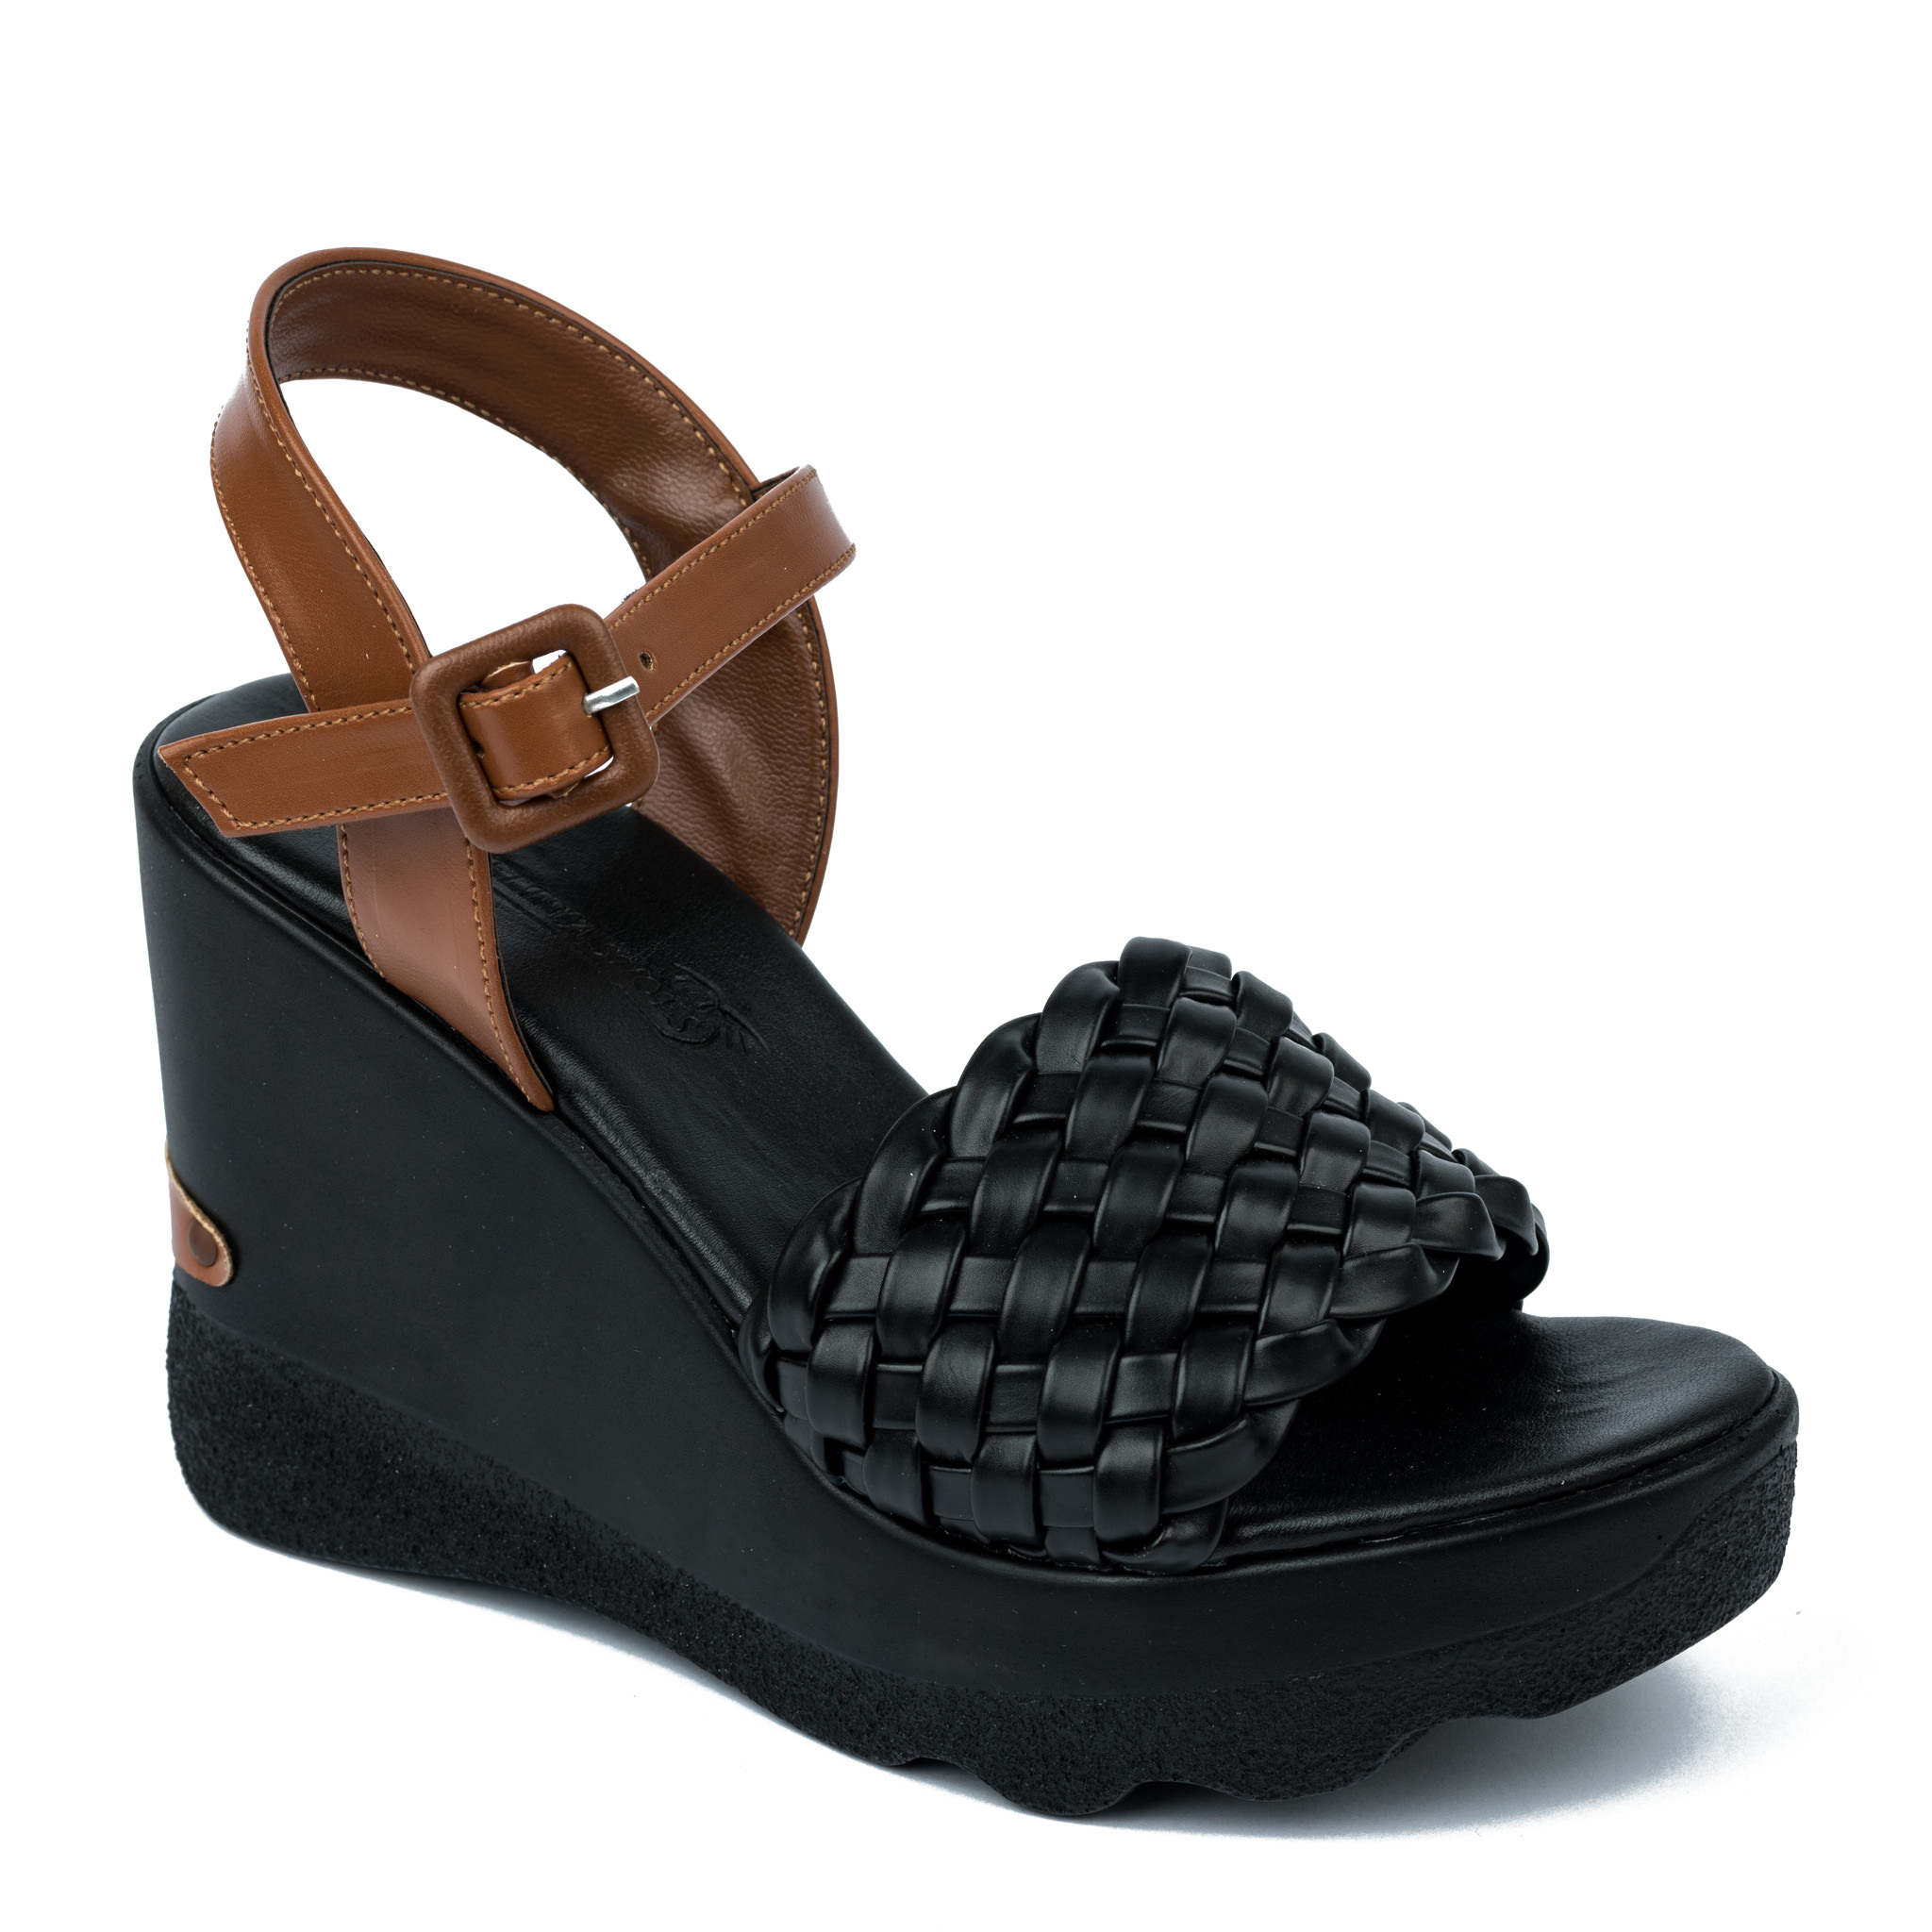 Women sandals A324 - BLACK